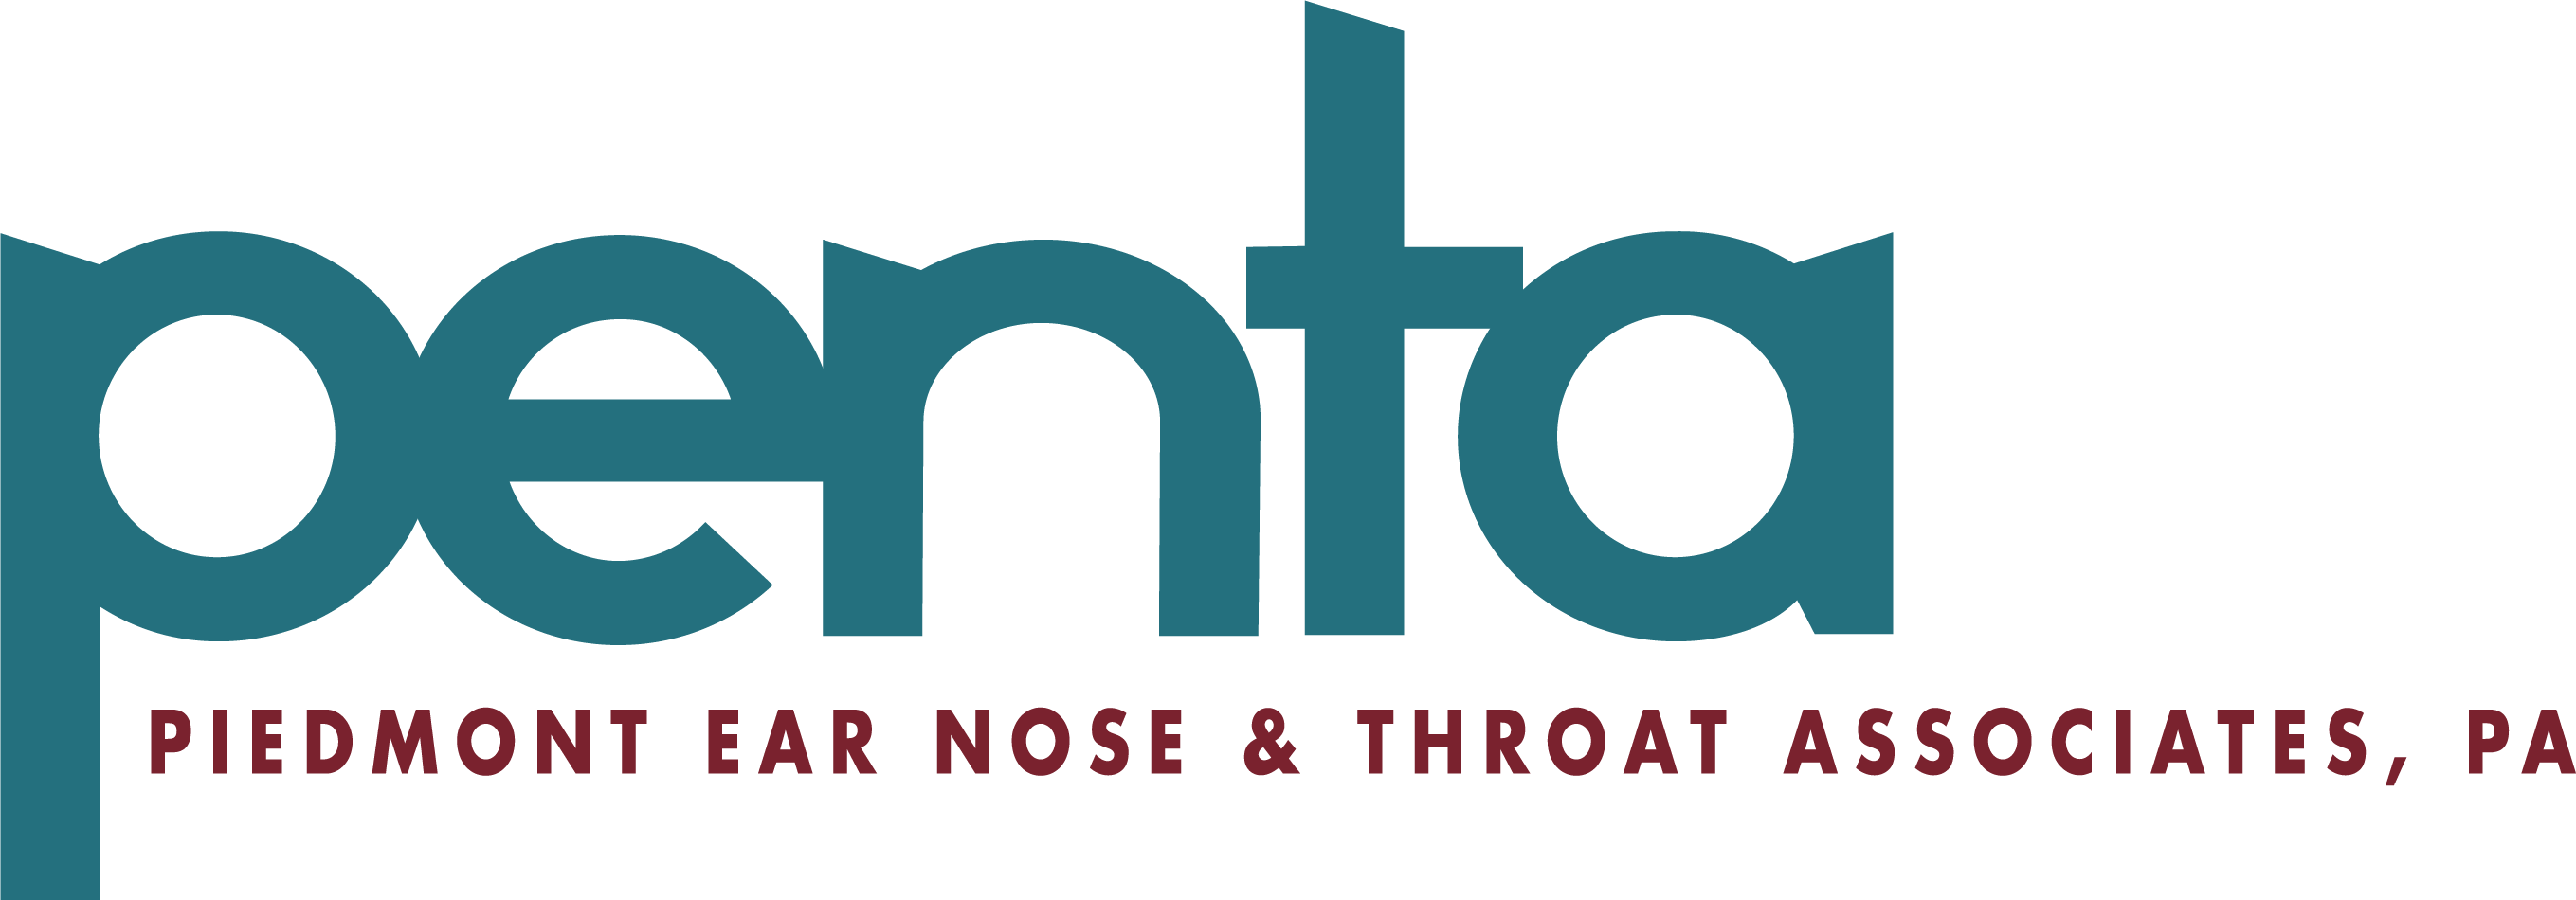 Piedmont Ear, Nose and Throat Associates